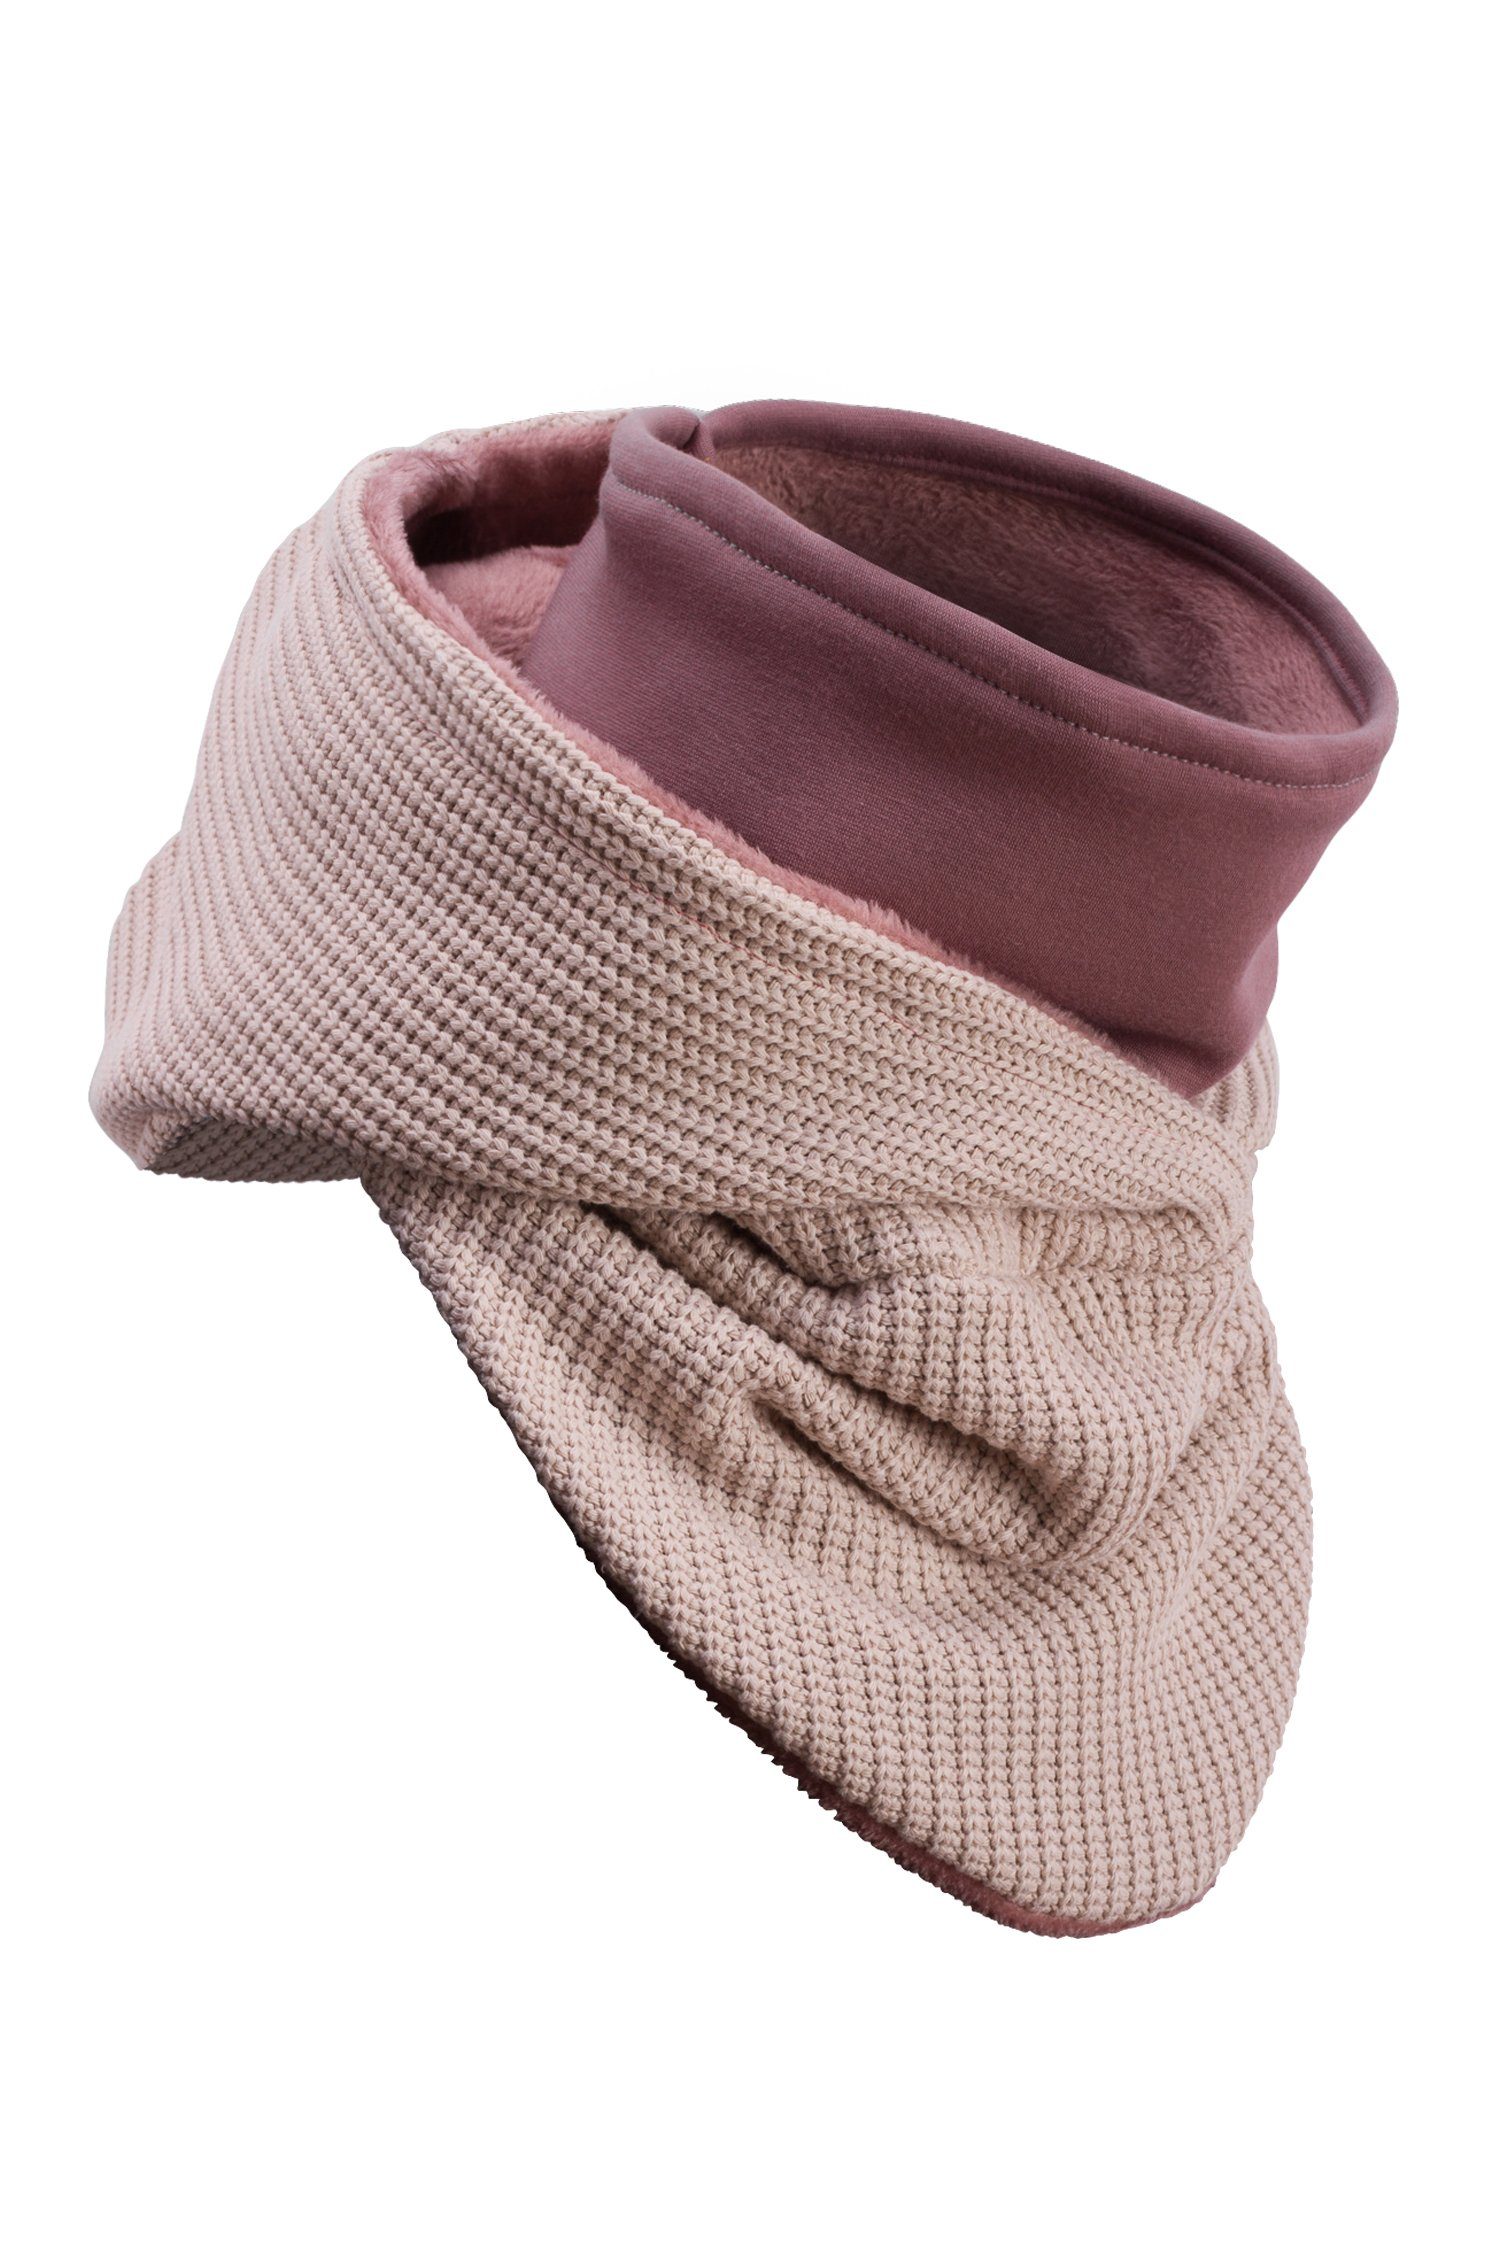 Manufaktur13 Modeschal Knit Hooded Loop - Kapuzenschal, Schal, Strickschal, mit integriertem Windbreaker